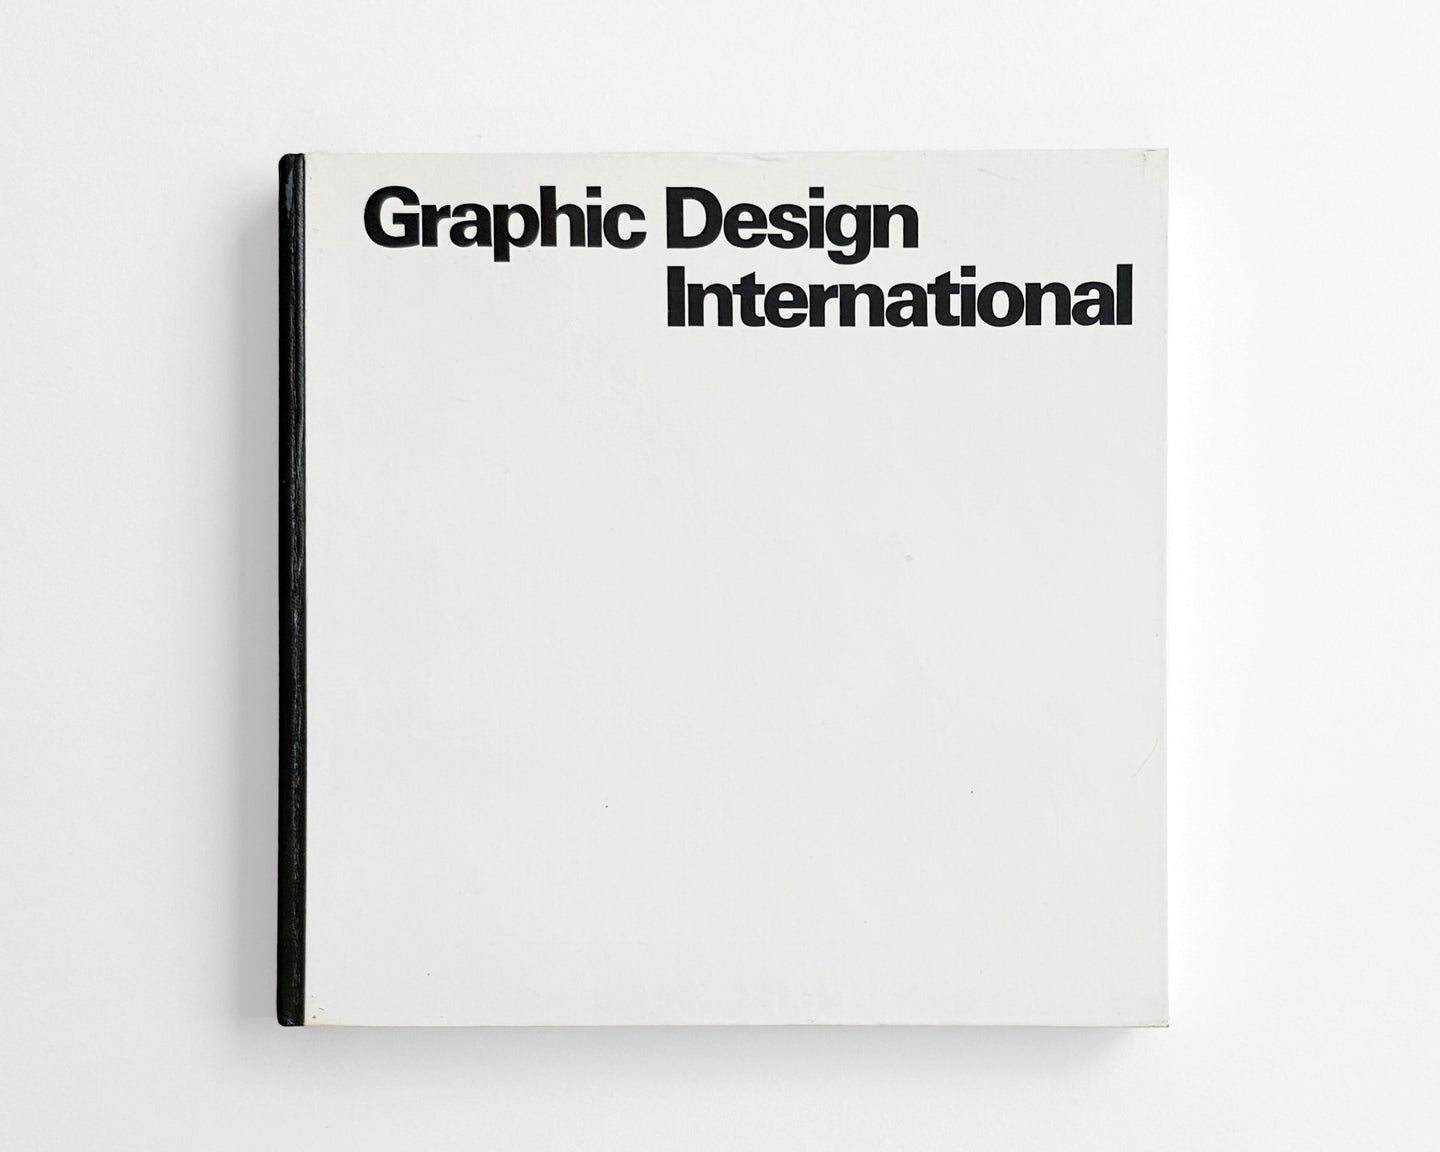 Graphic Design International by Igildo G. Biesele, 1972